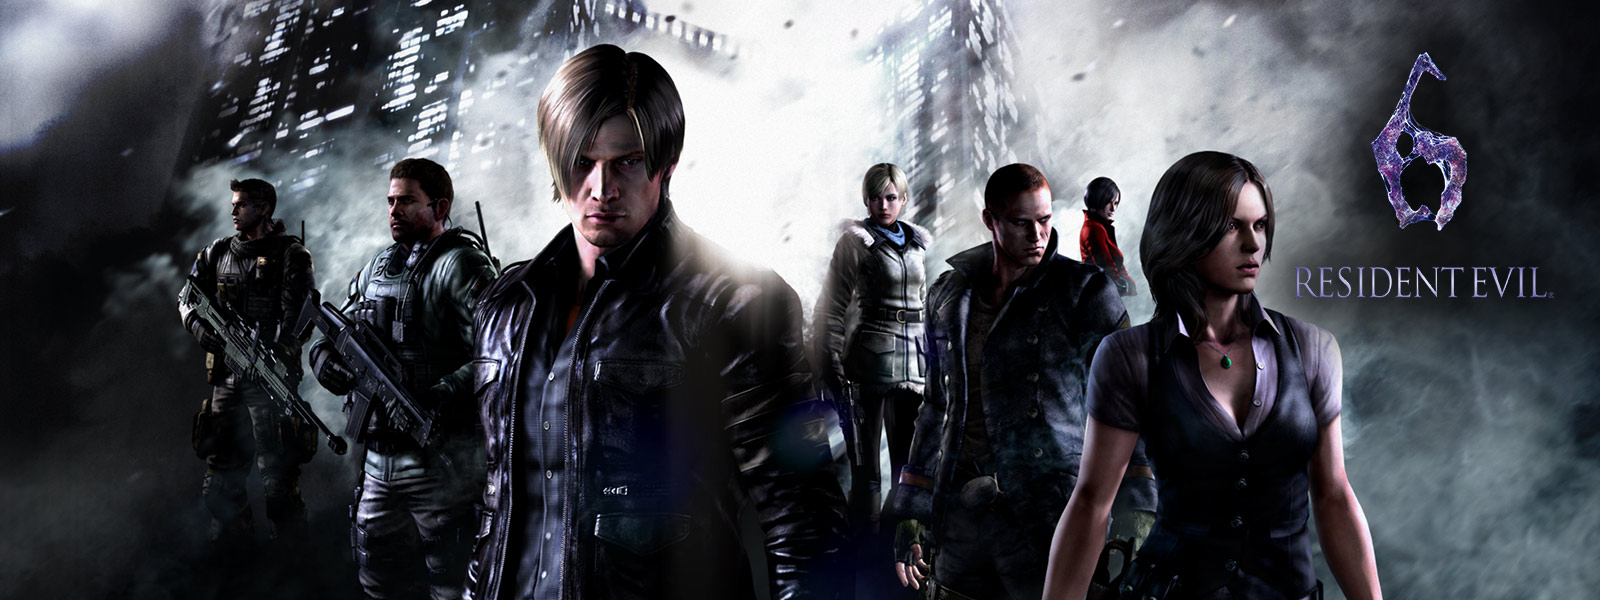 Resident Evil 6, όλοι οι χαρακτήρες στέκονται όρθιοι μπροστά από απειλητικούς ουρανοξύστες